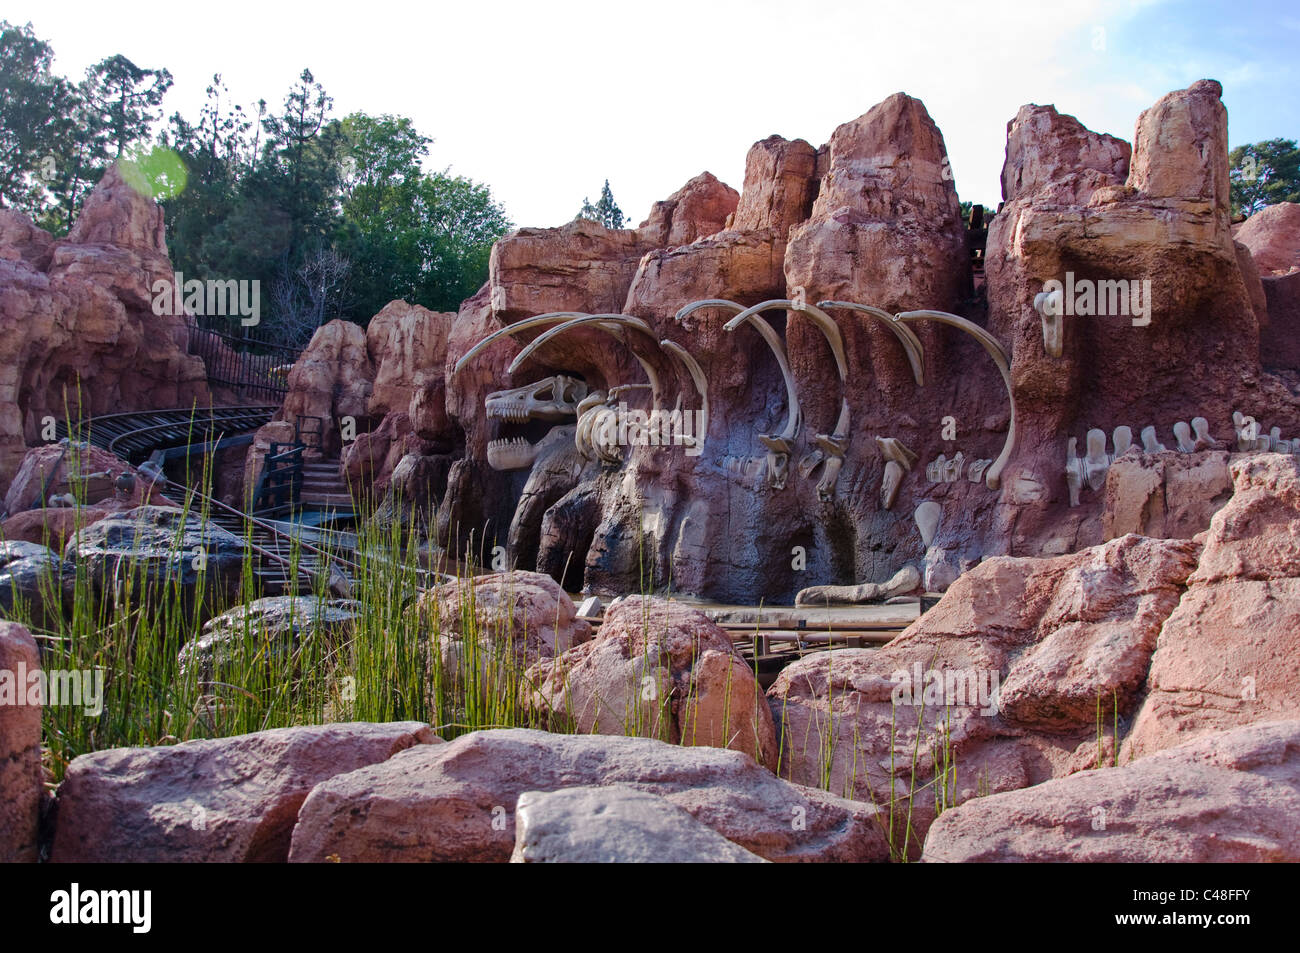 Disneyland Stockfoto